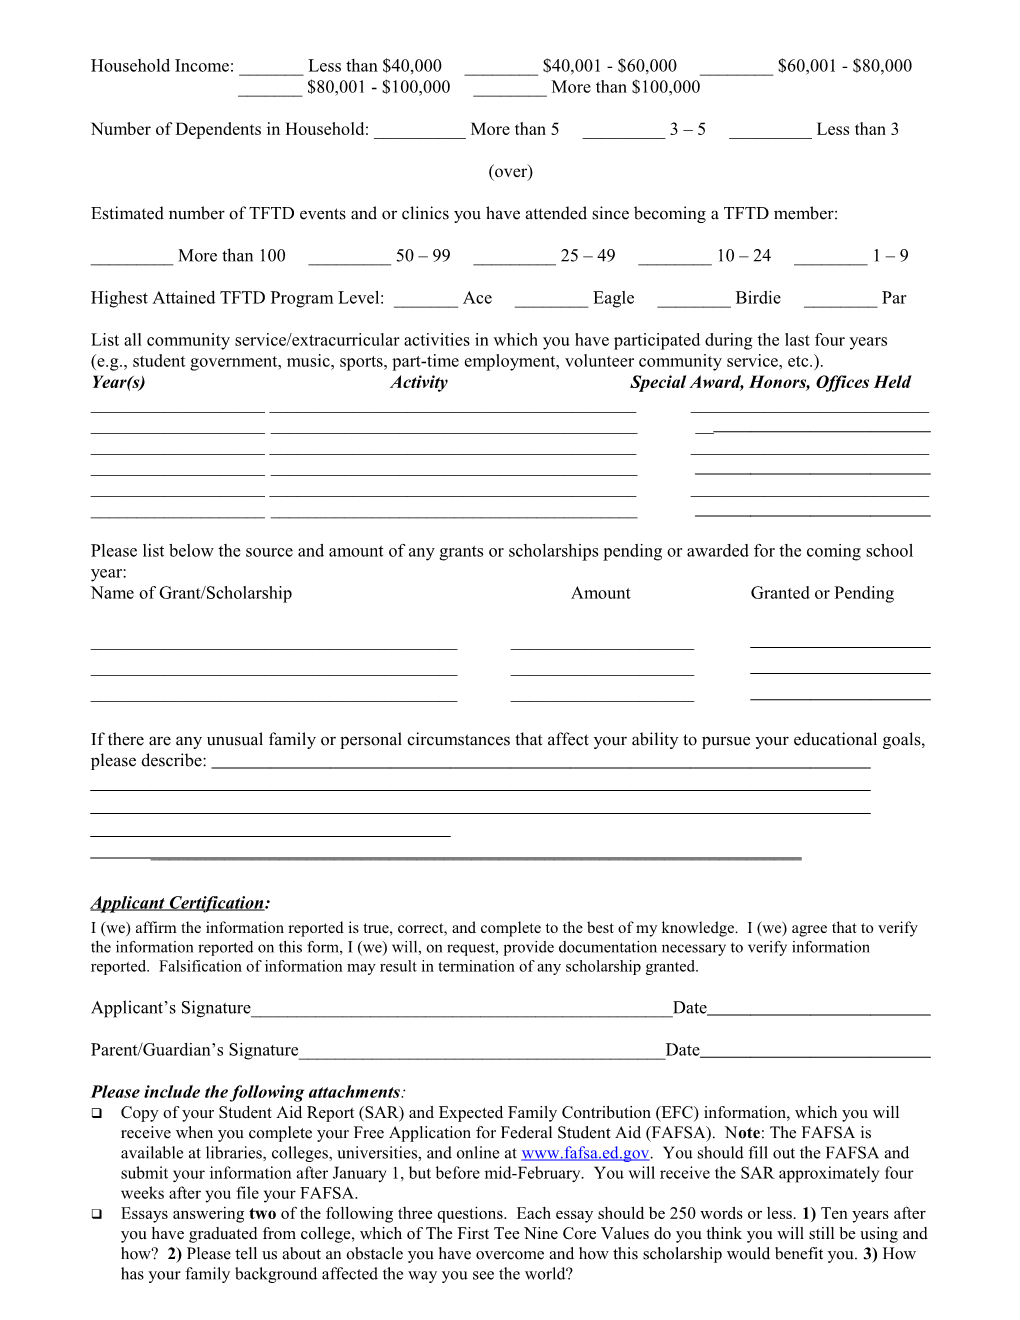 CFGM Scholarship Application Form - Academic Year 1999-2000